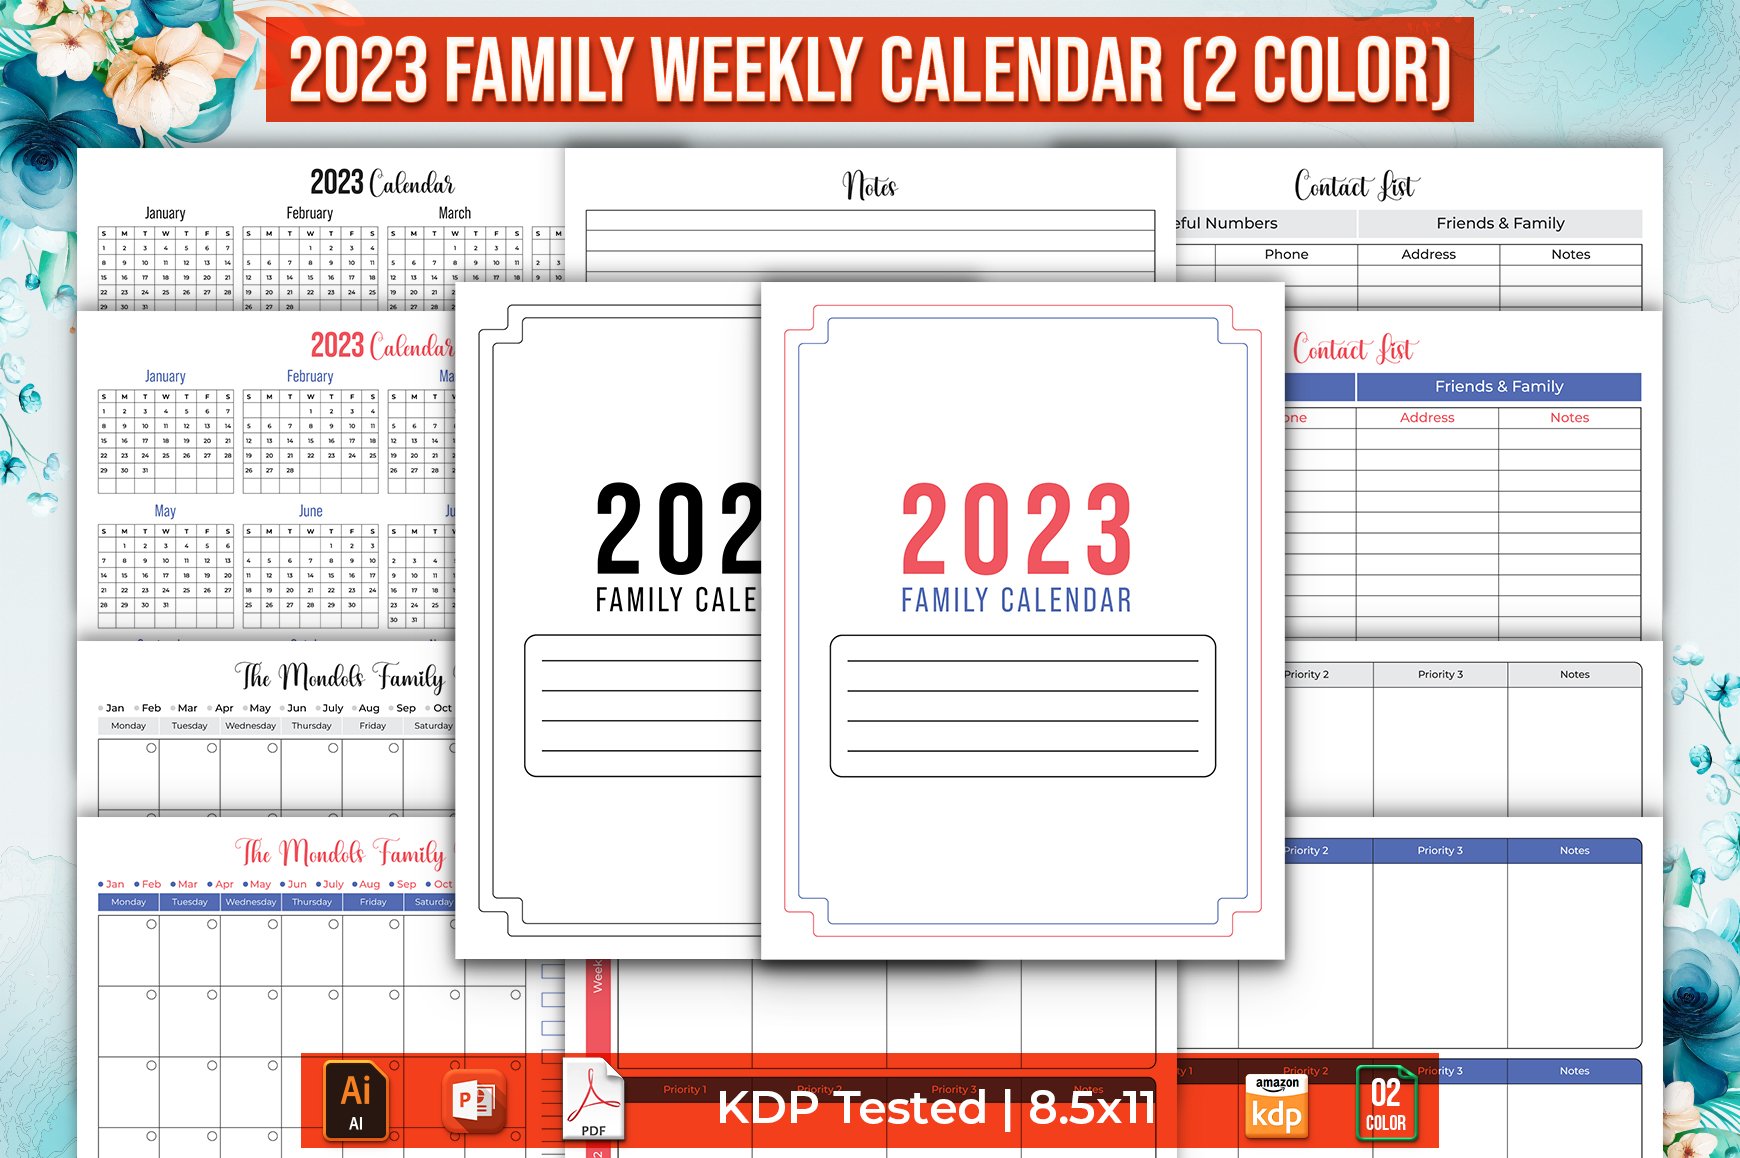 Weekly Family 2023 Wall Calendar by Rasel Mondol on Dribbble